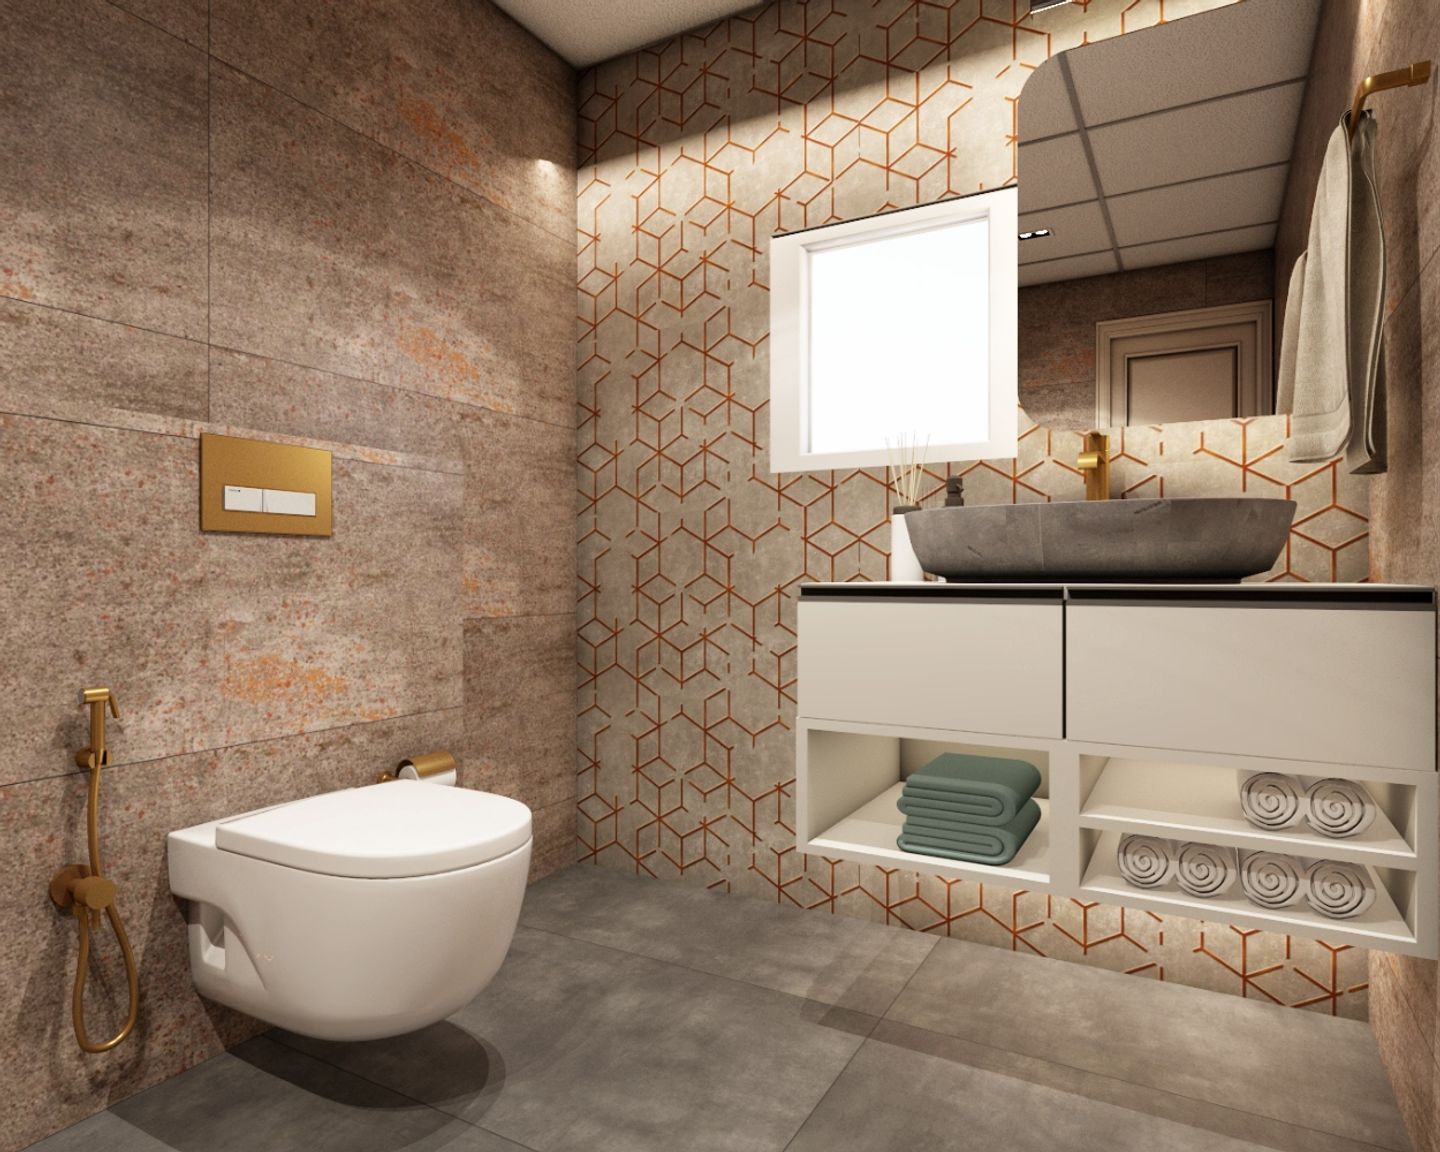 7X7 Ft Contemporary Small Bathroom Grey And Brown Bathroom Design - Livspace